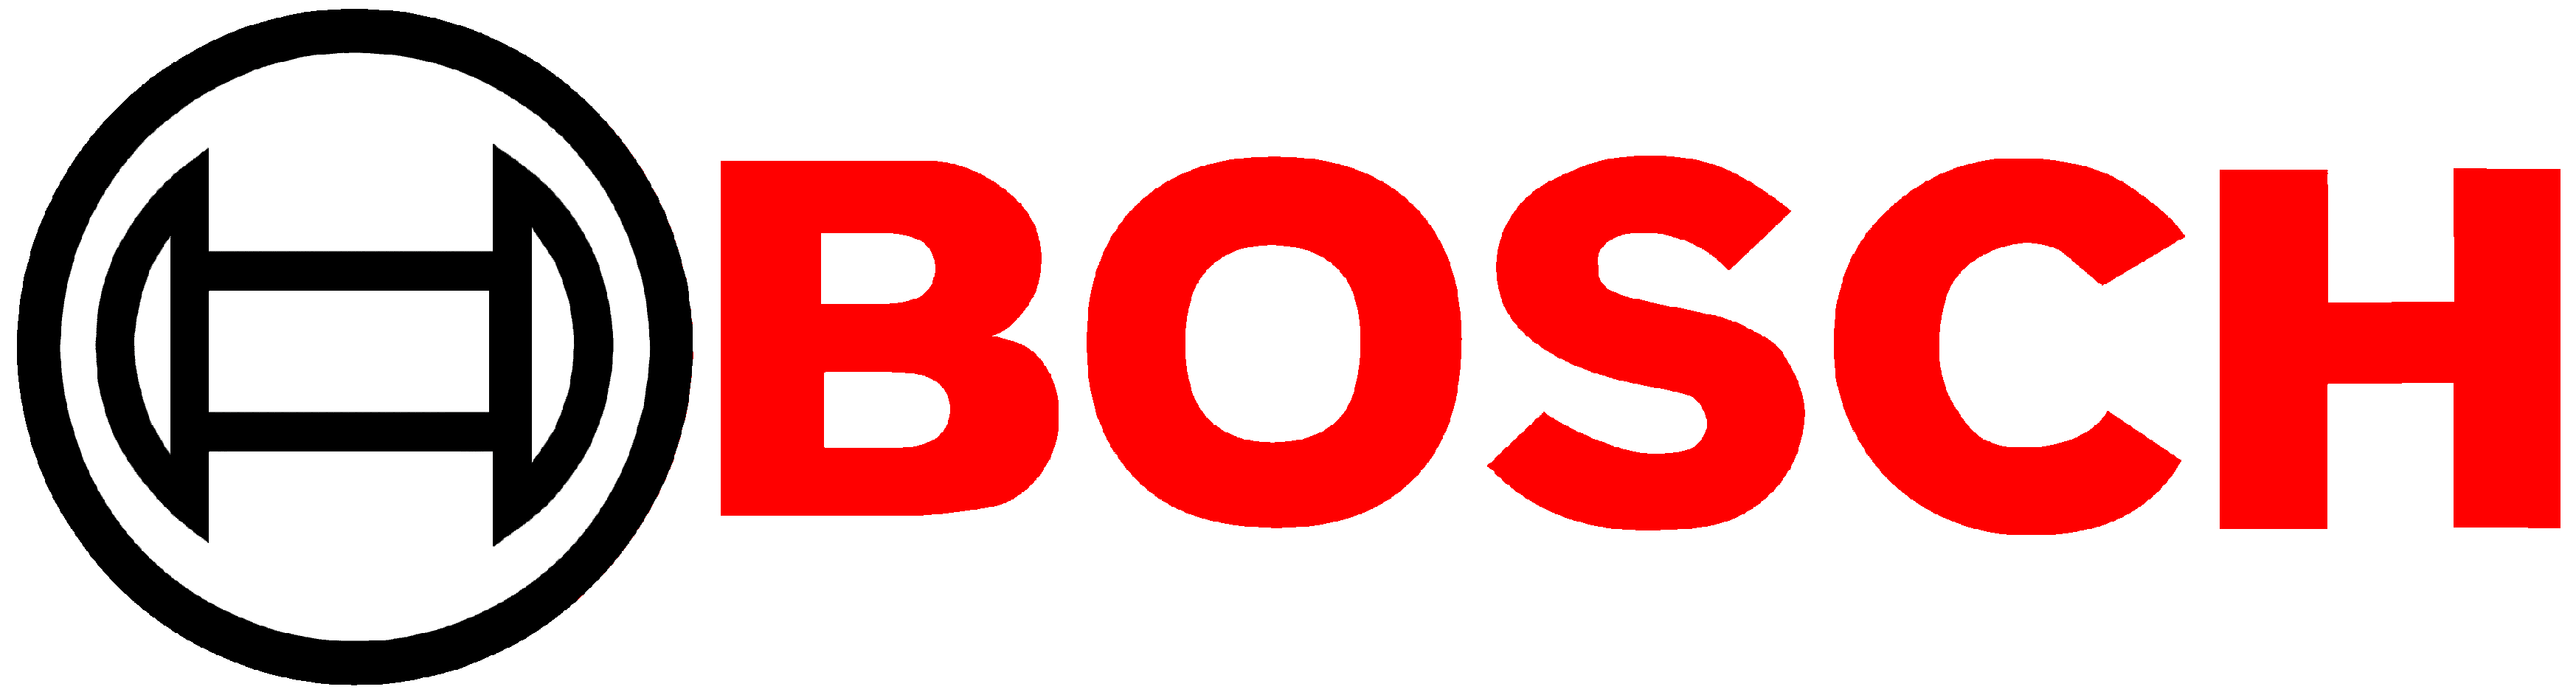 logo-Bosch-1.png